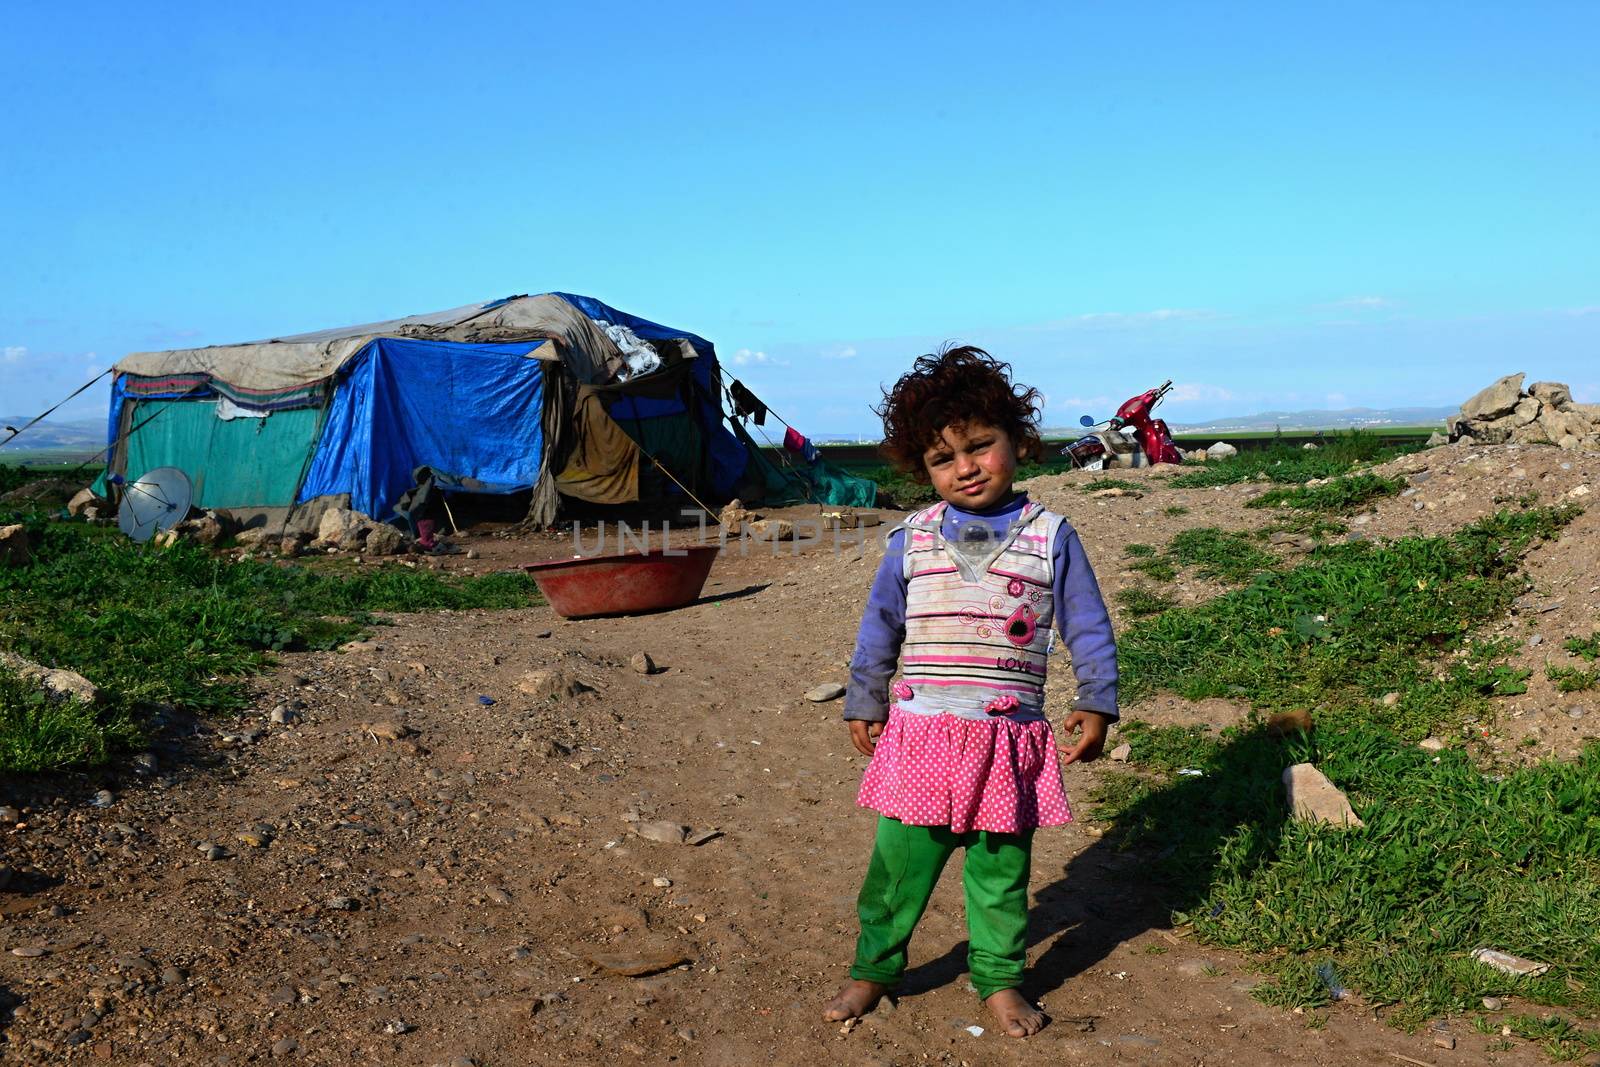 portrait of refugees living homeless in Turkey. 1.4.2015 Reyhanli, Turkey